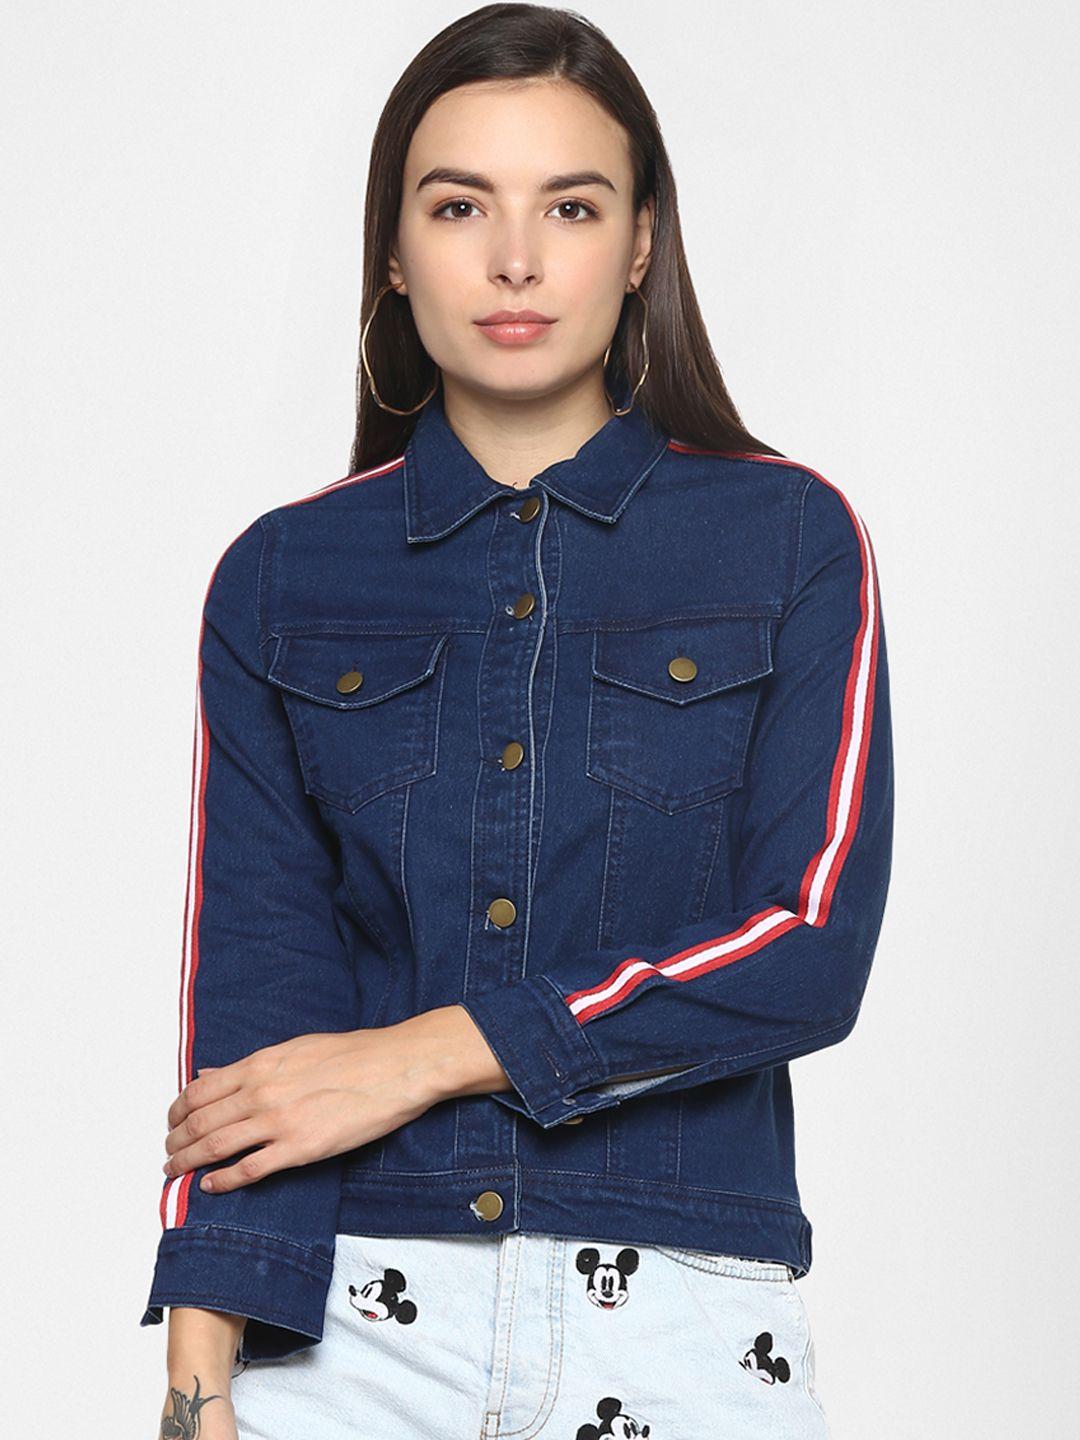 stylestone women blue striped denim jacket